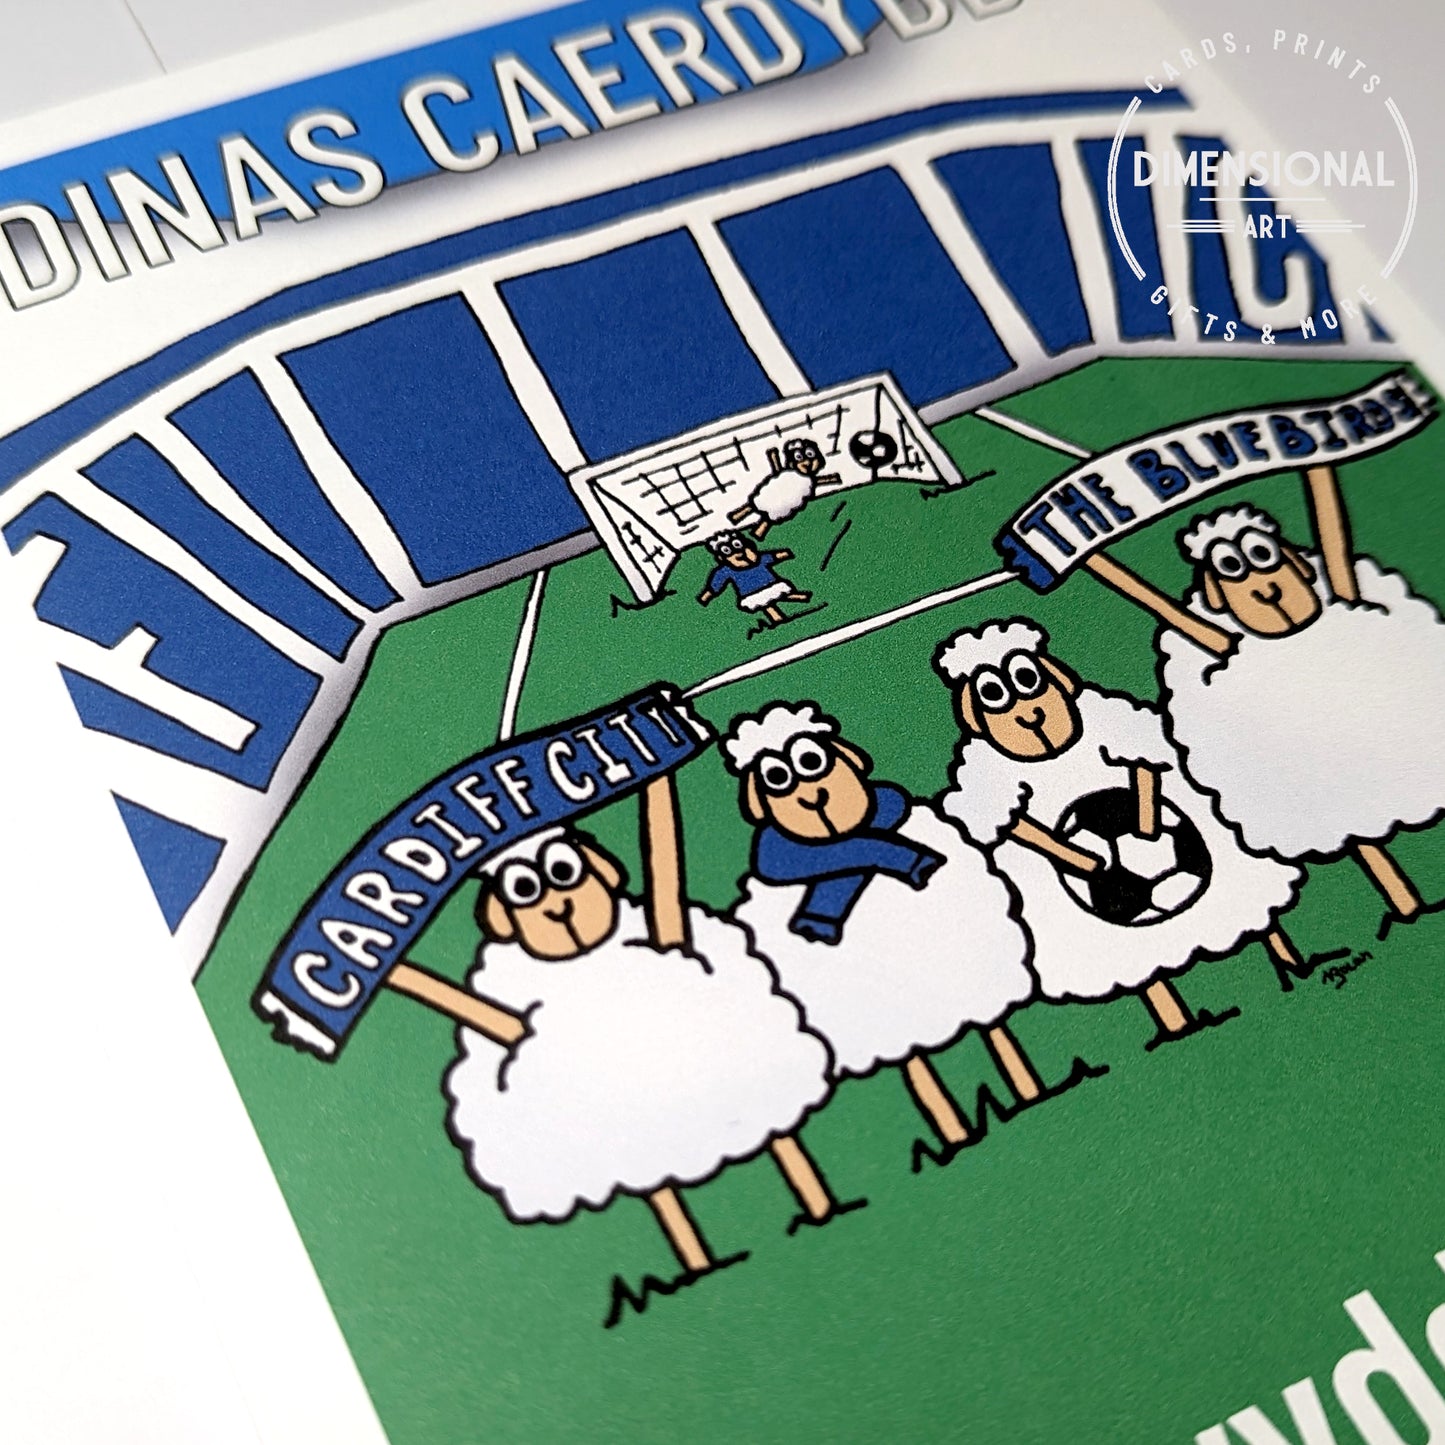 Dinas Caerdydd (Cardiff City football) Sheep Card (Birthday) WELSH